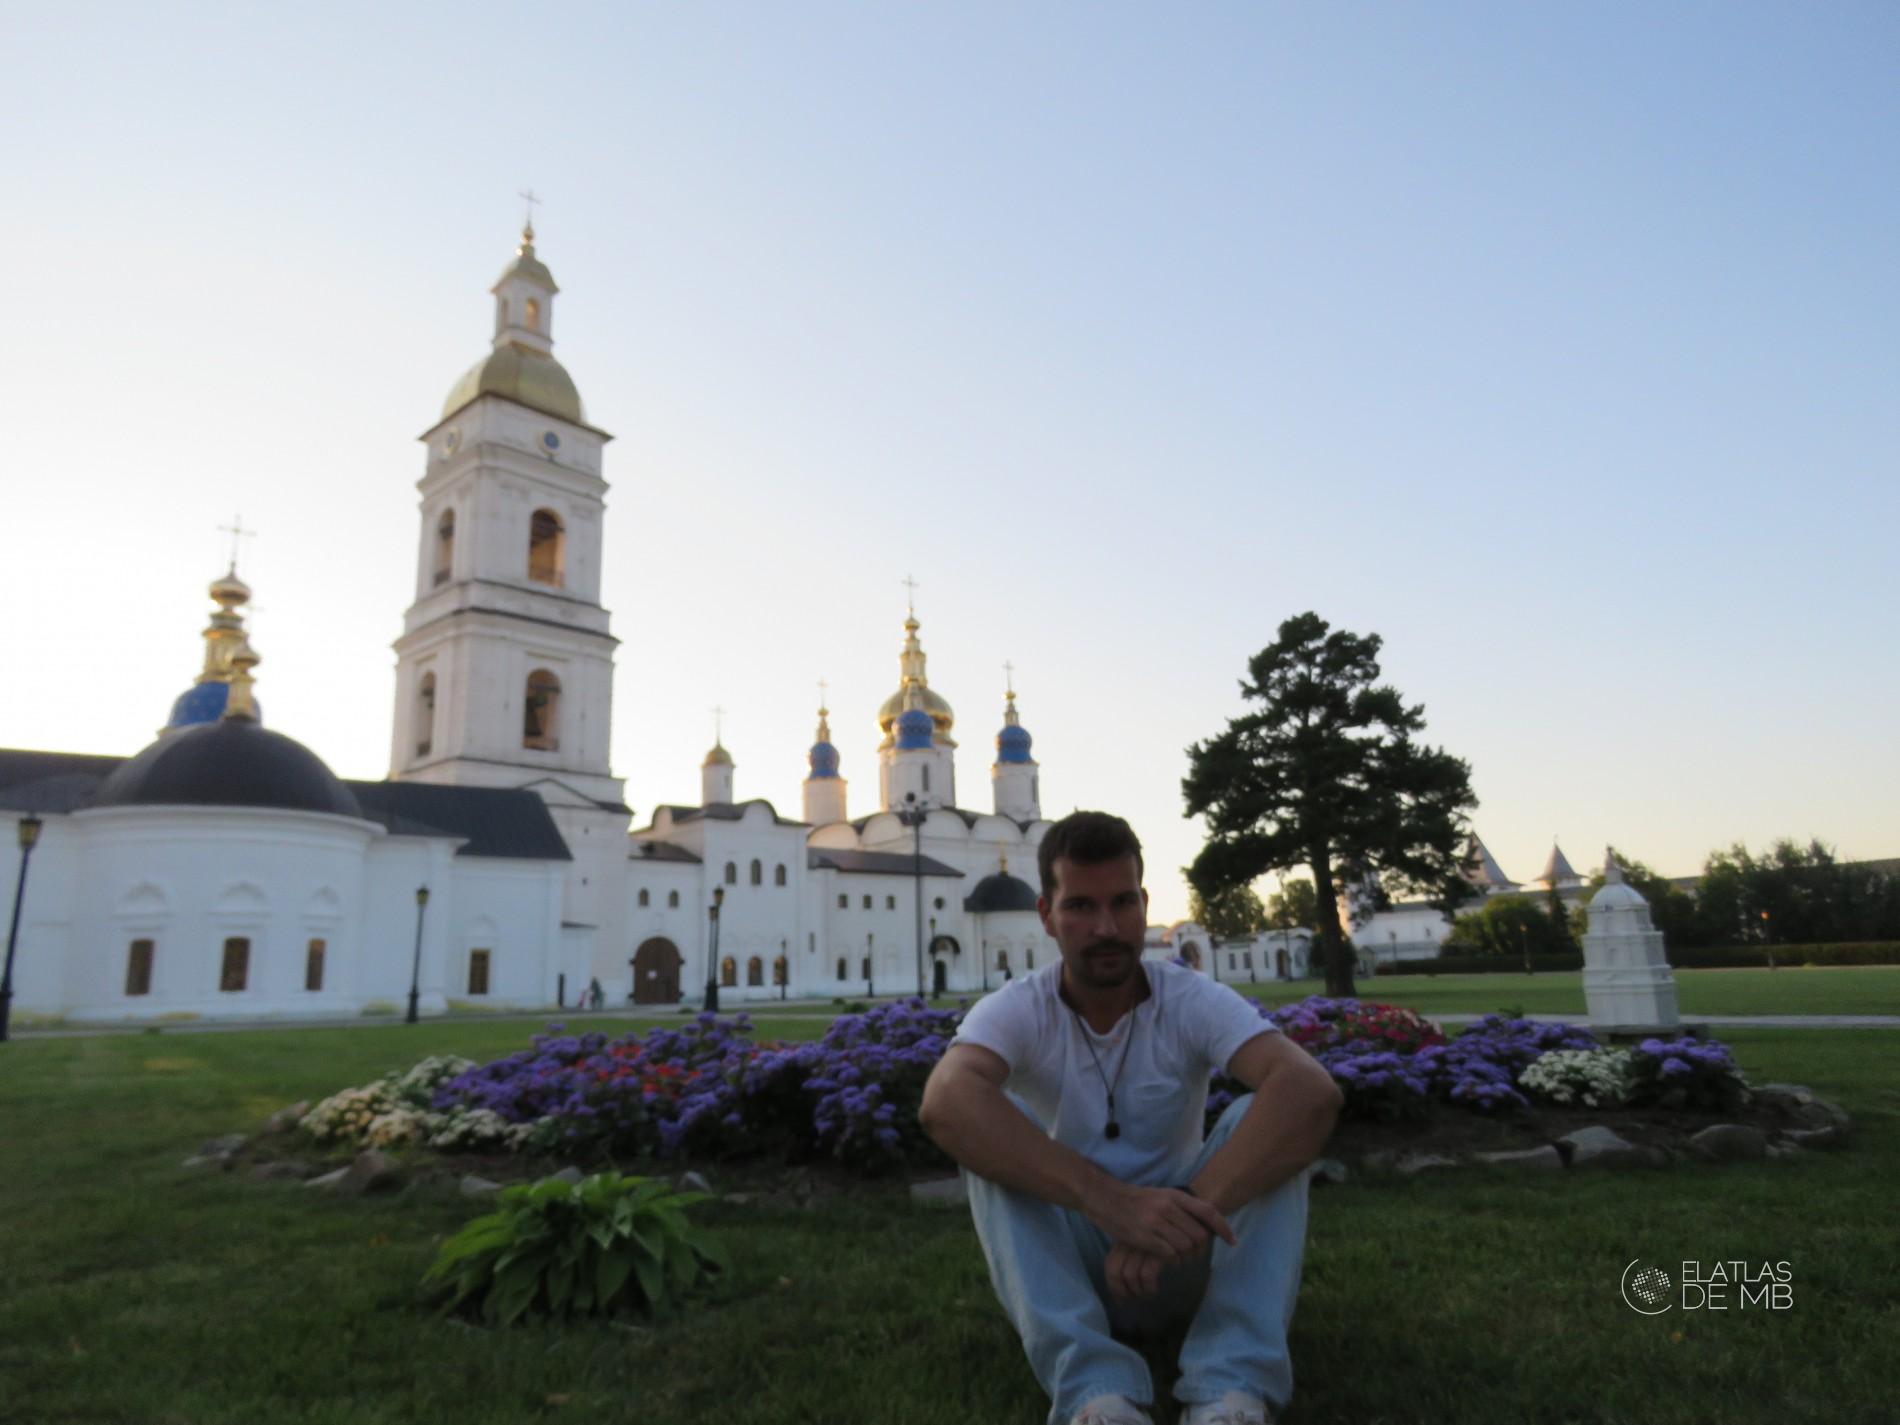 Visitar TOBOLSK y TYUMEN, en plena Siberia [Etapa 3 Transiberiano]